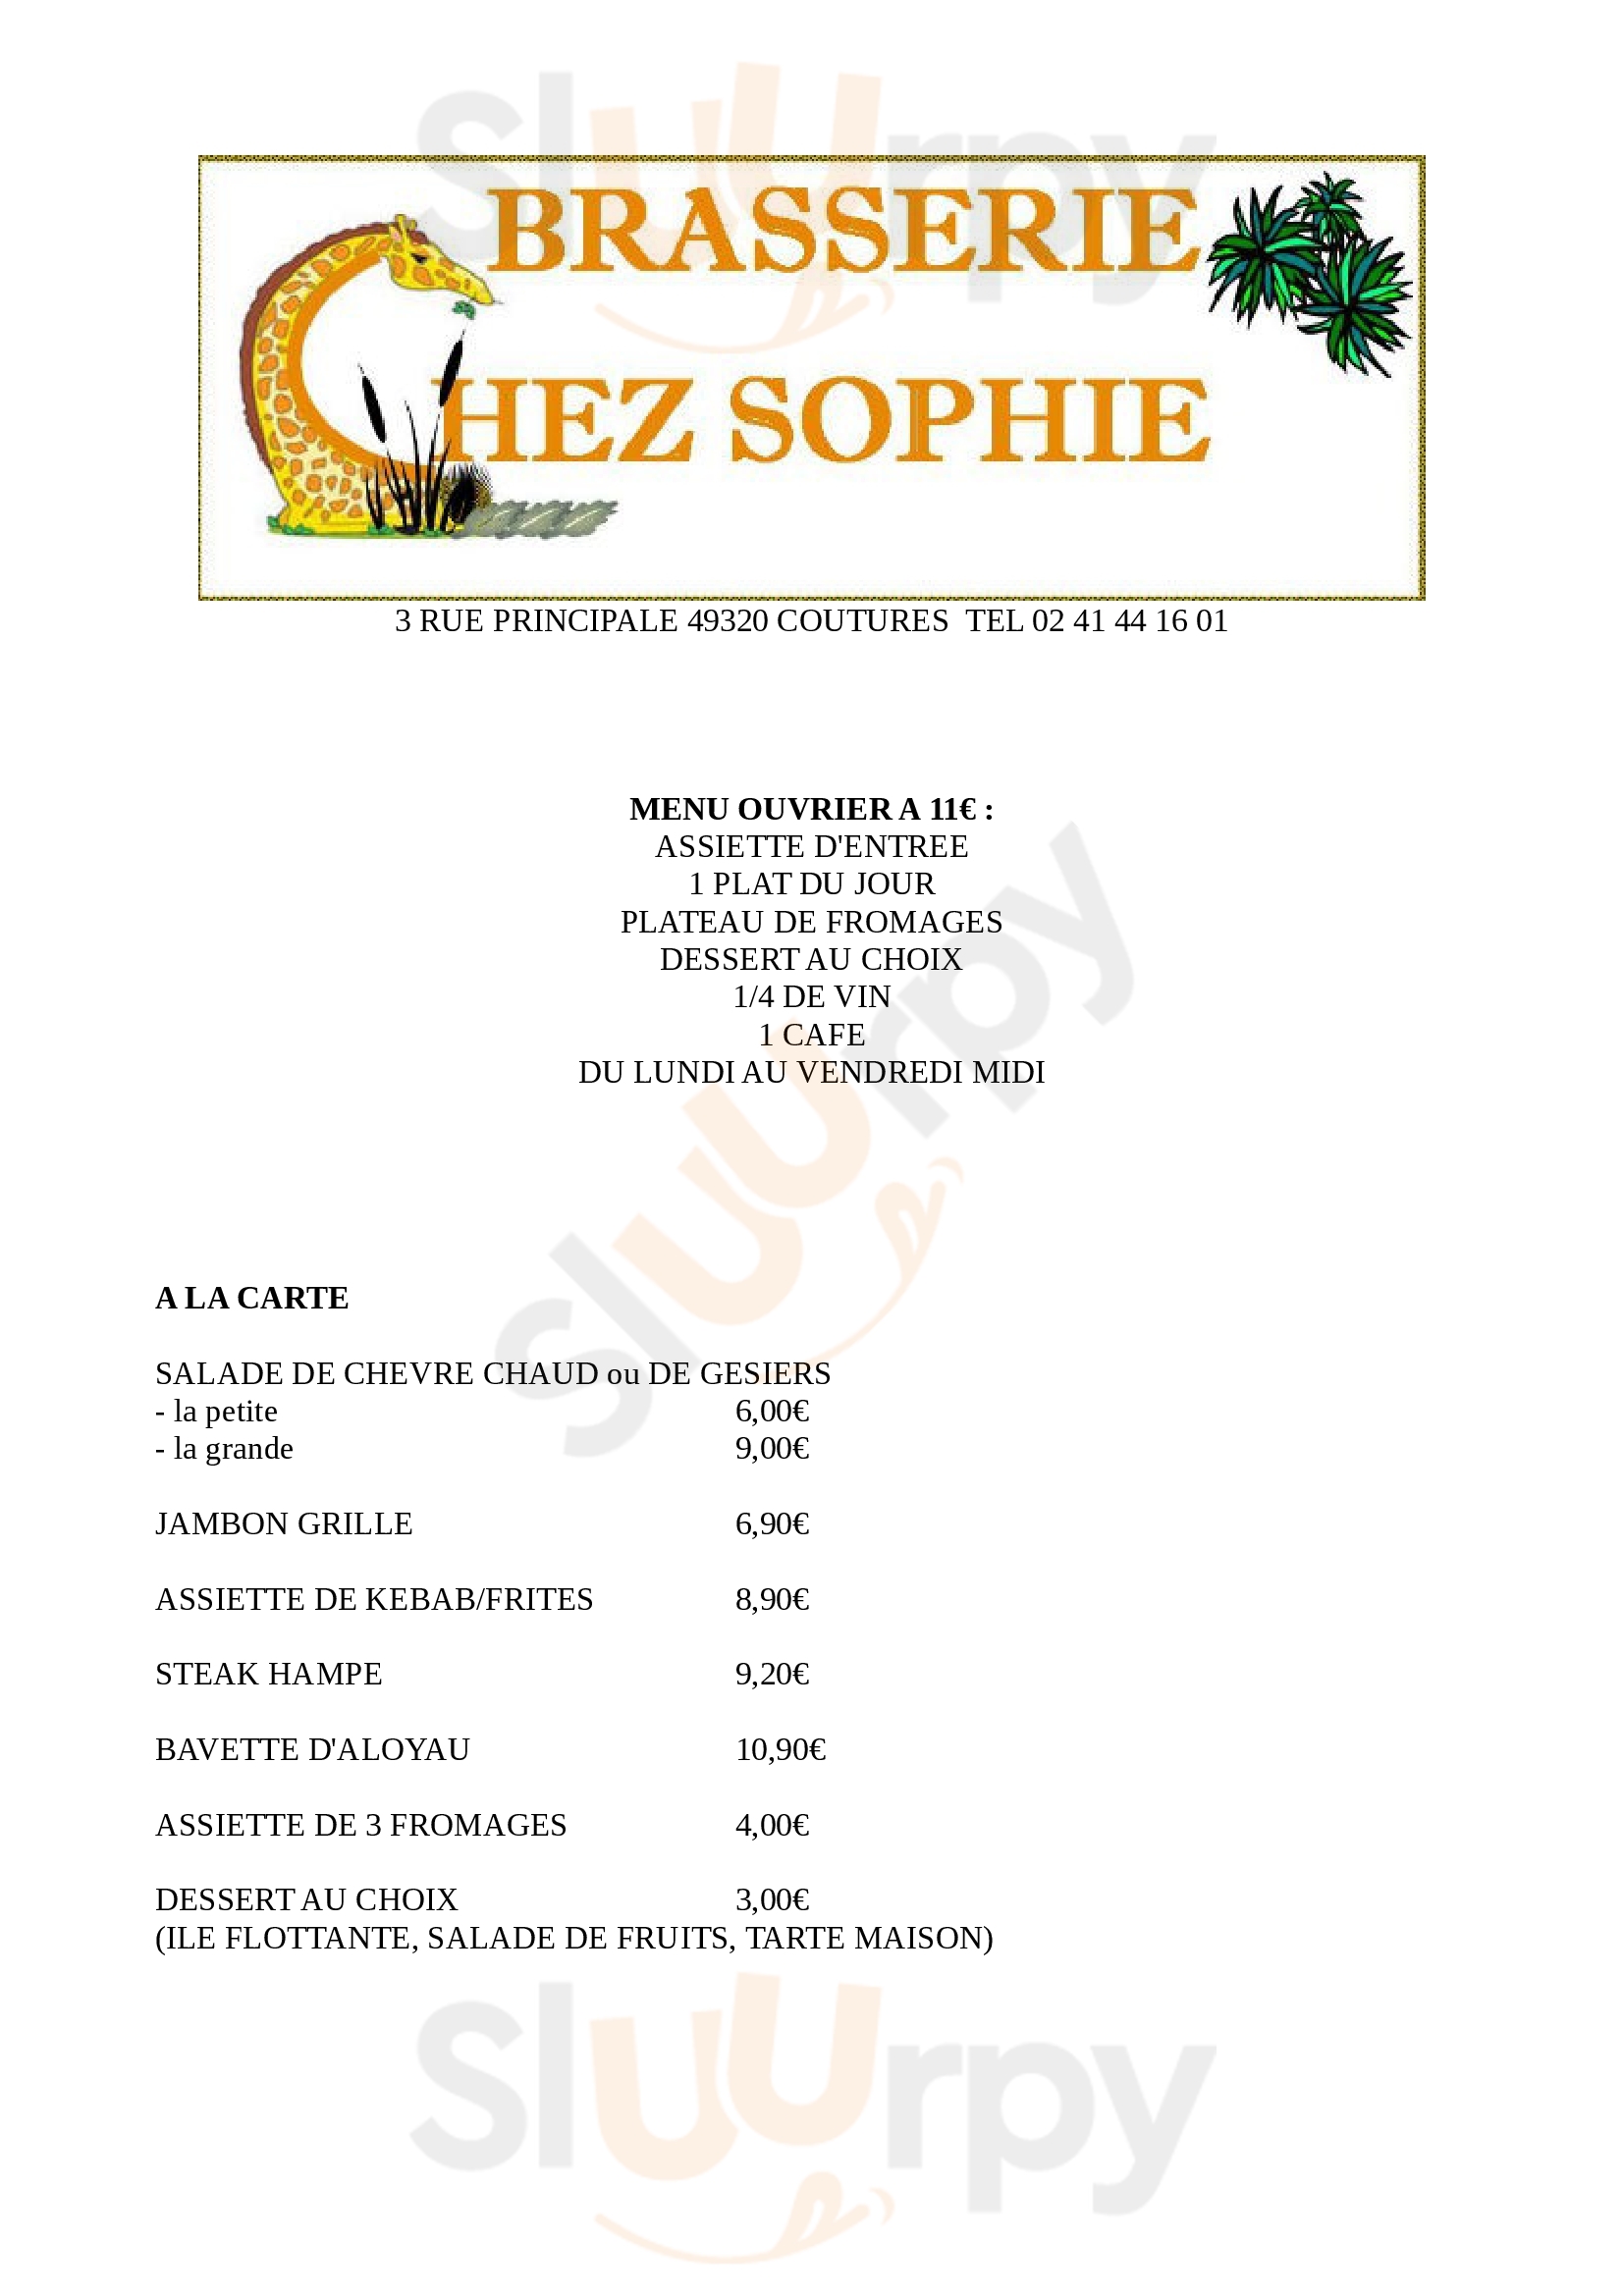 Brasserie Chez Sophie Coutures Menu - 1